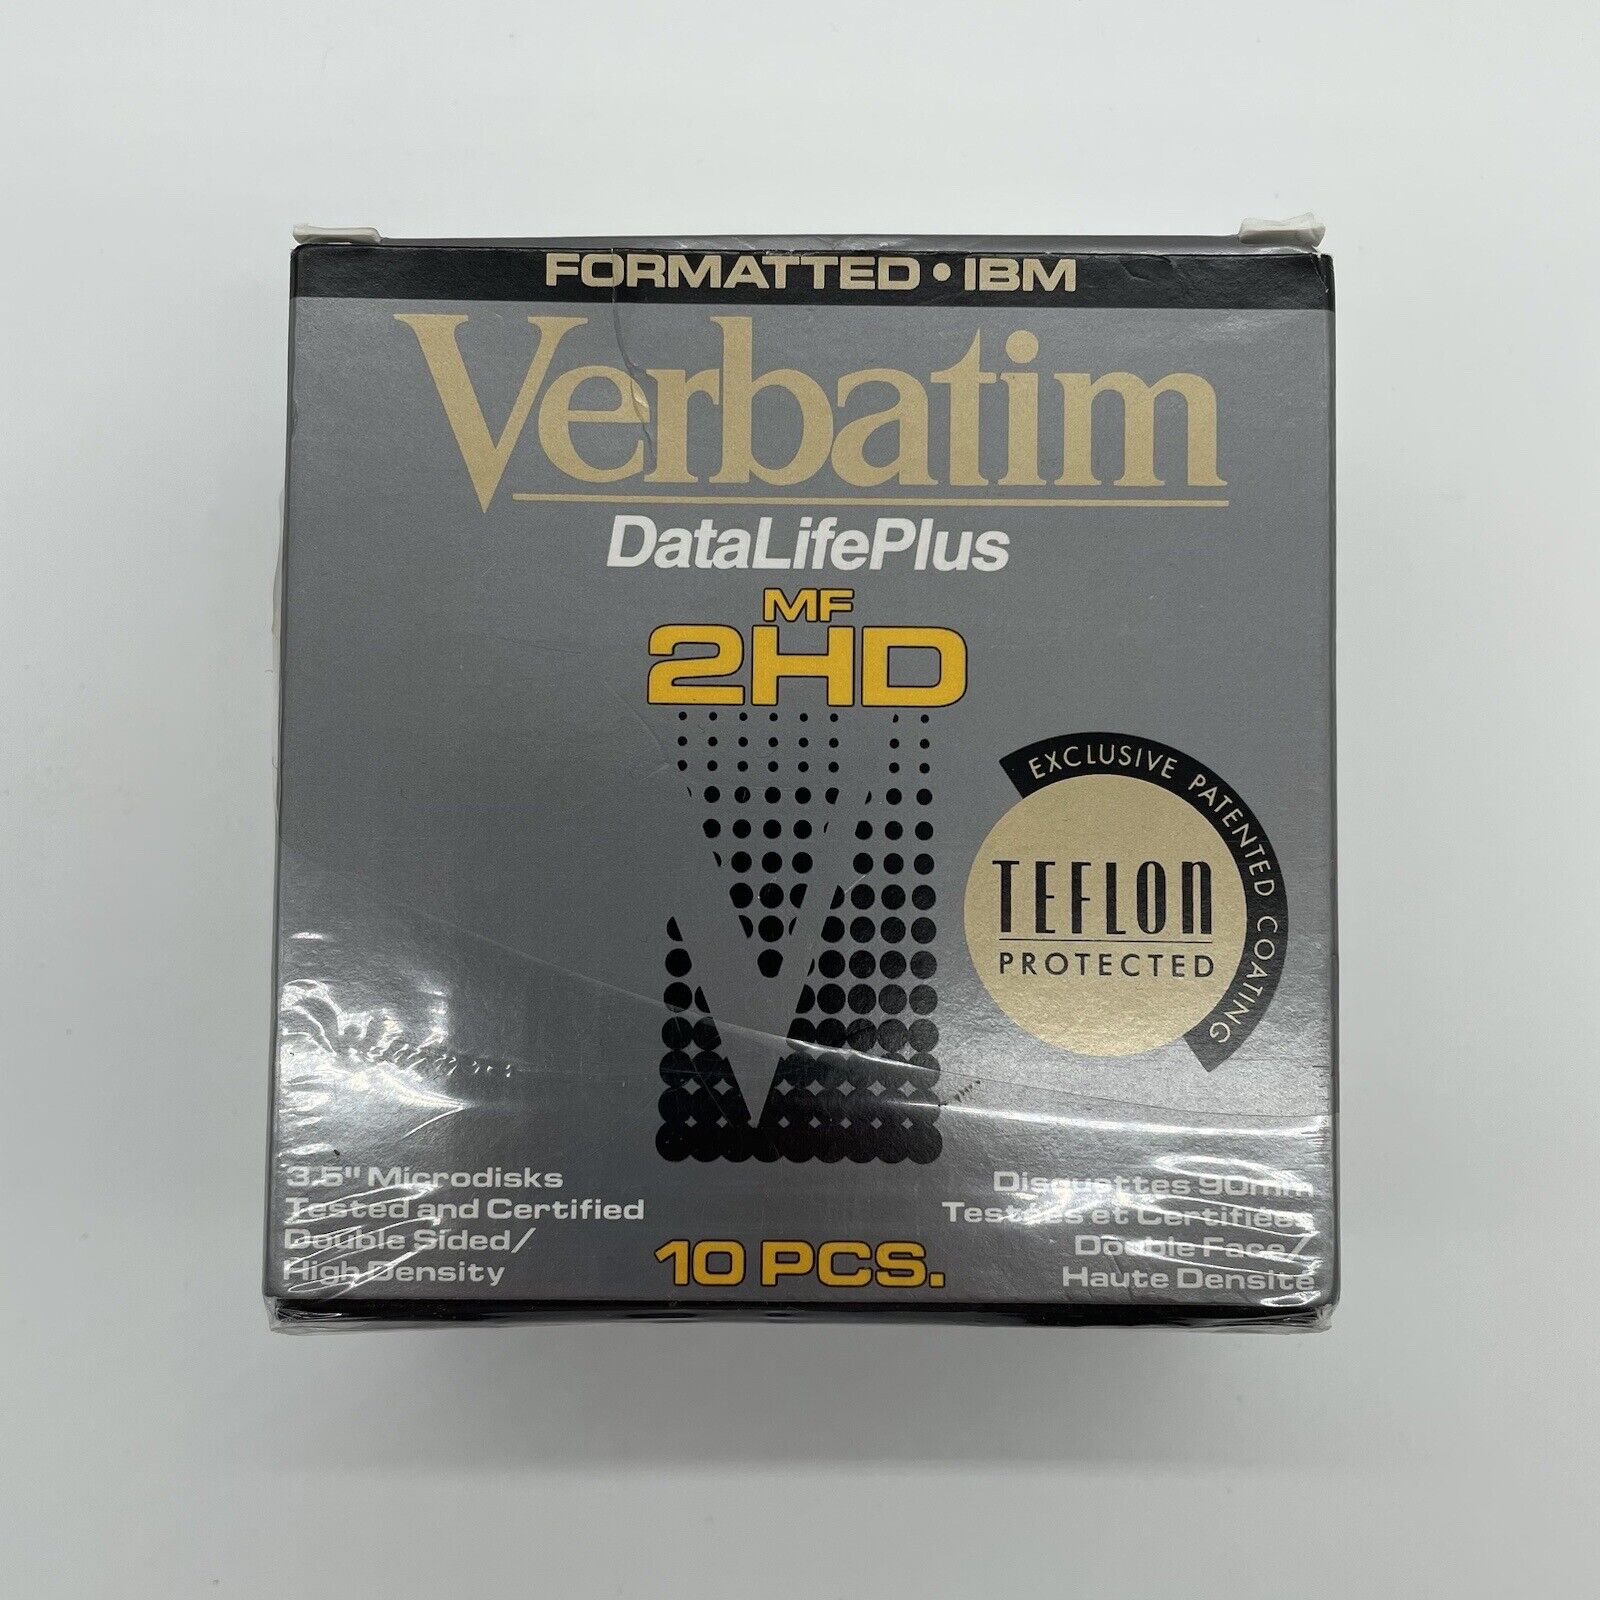 Pack of 10 Verbatim DataLife Plus 3.5” Disks MF 2HD IBM Formatted Open Box